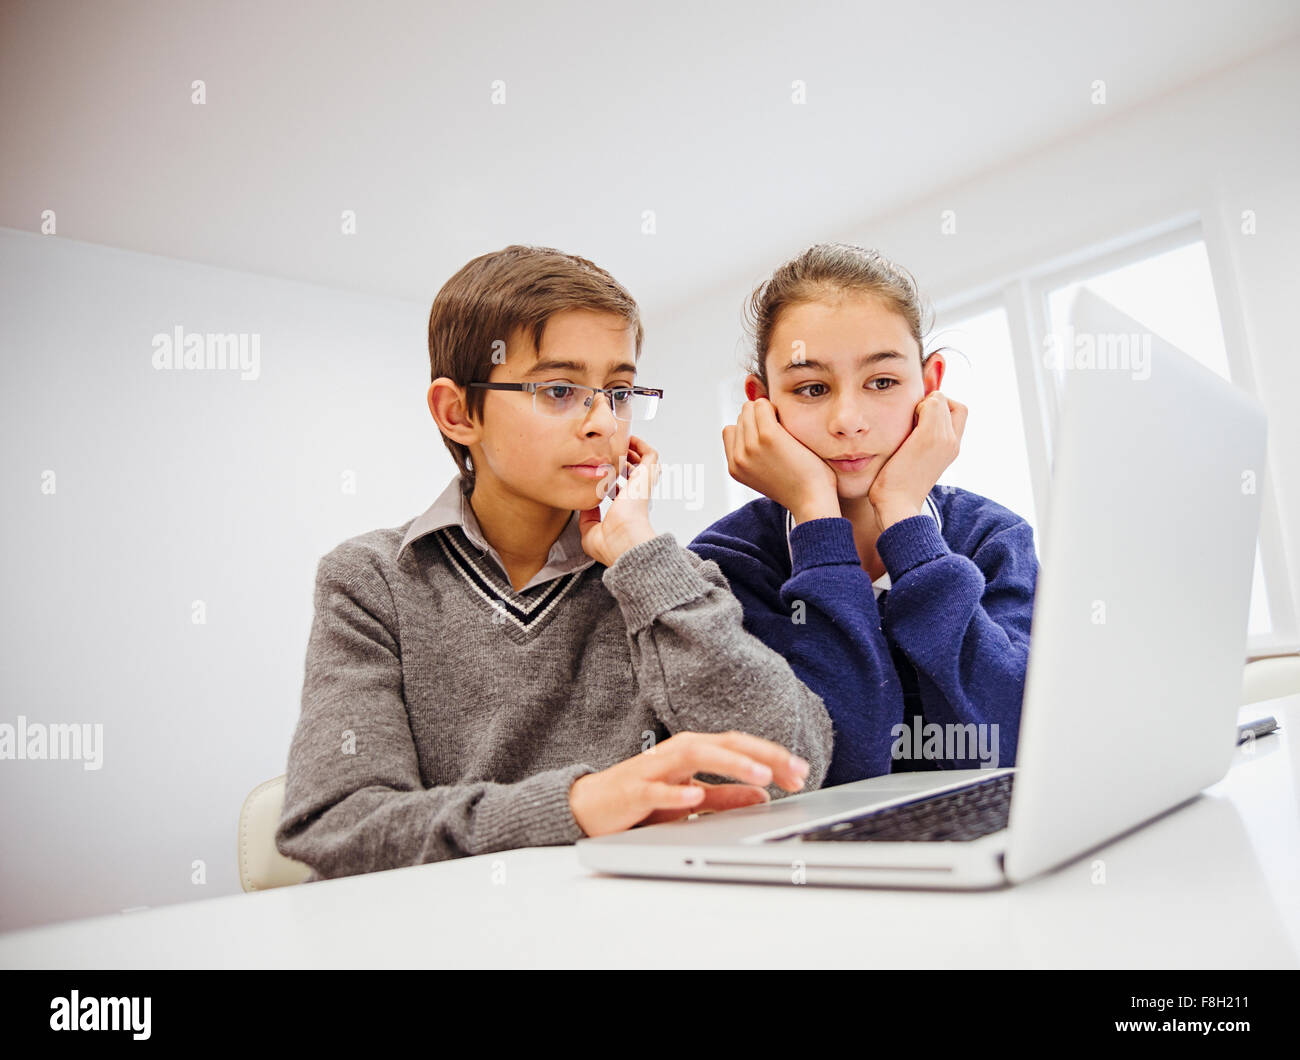 Mixed race children using laptop at desk Stock Photo